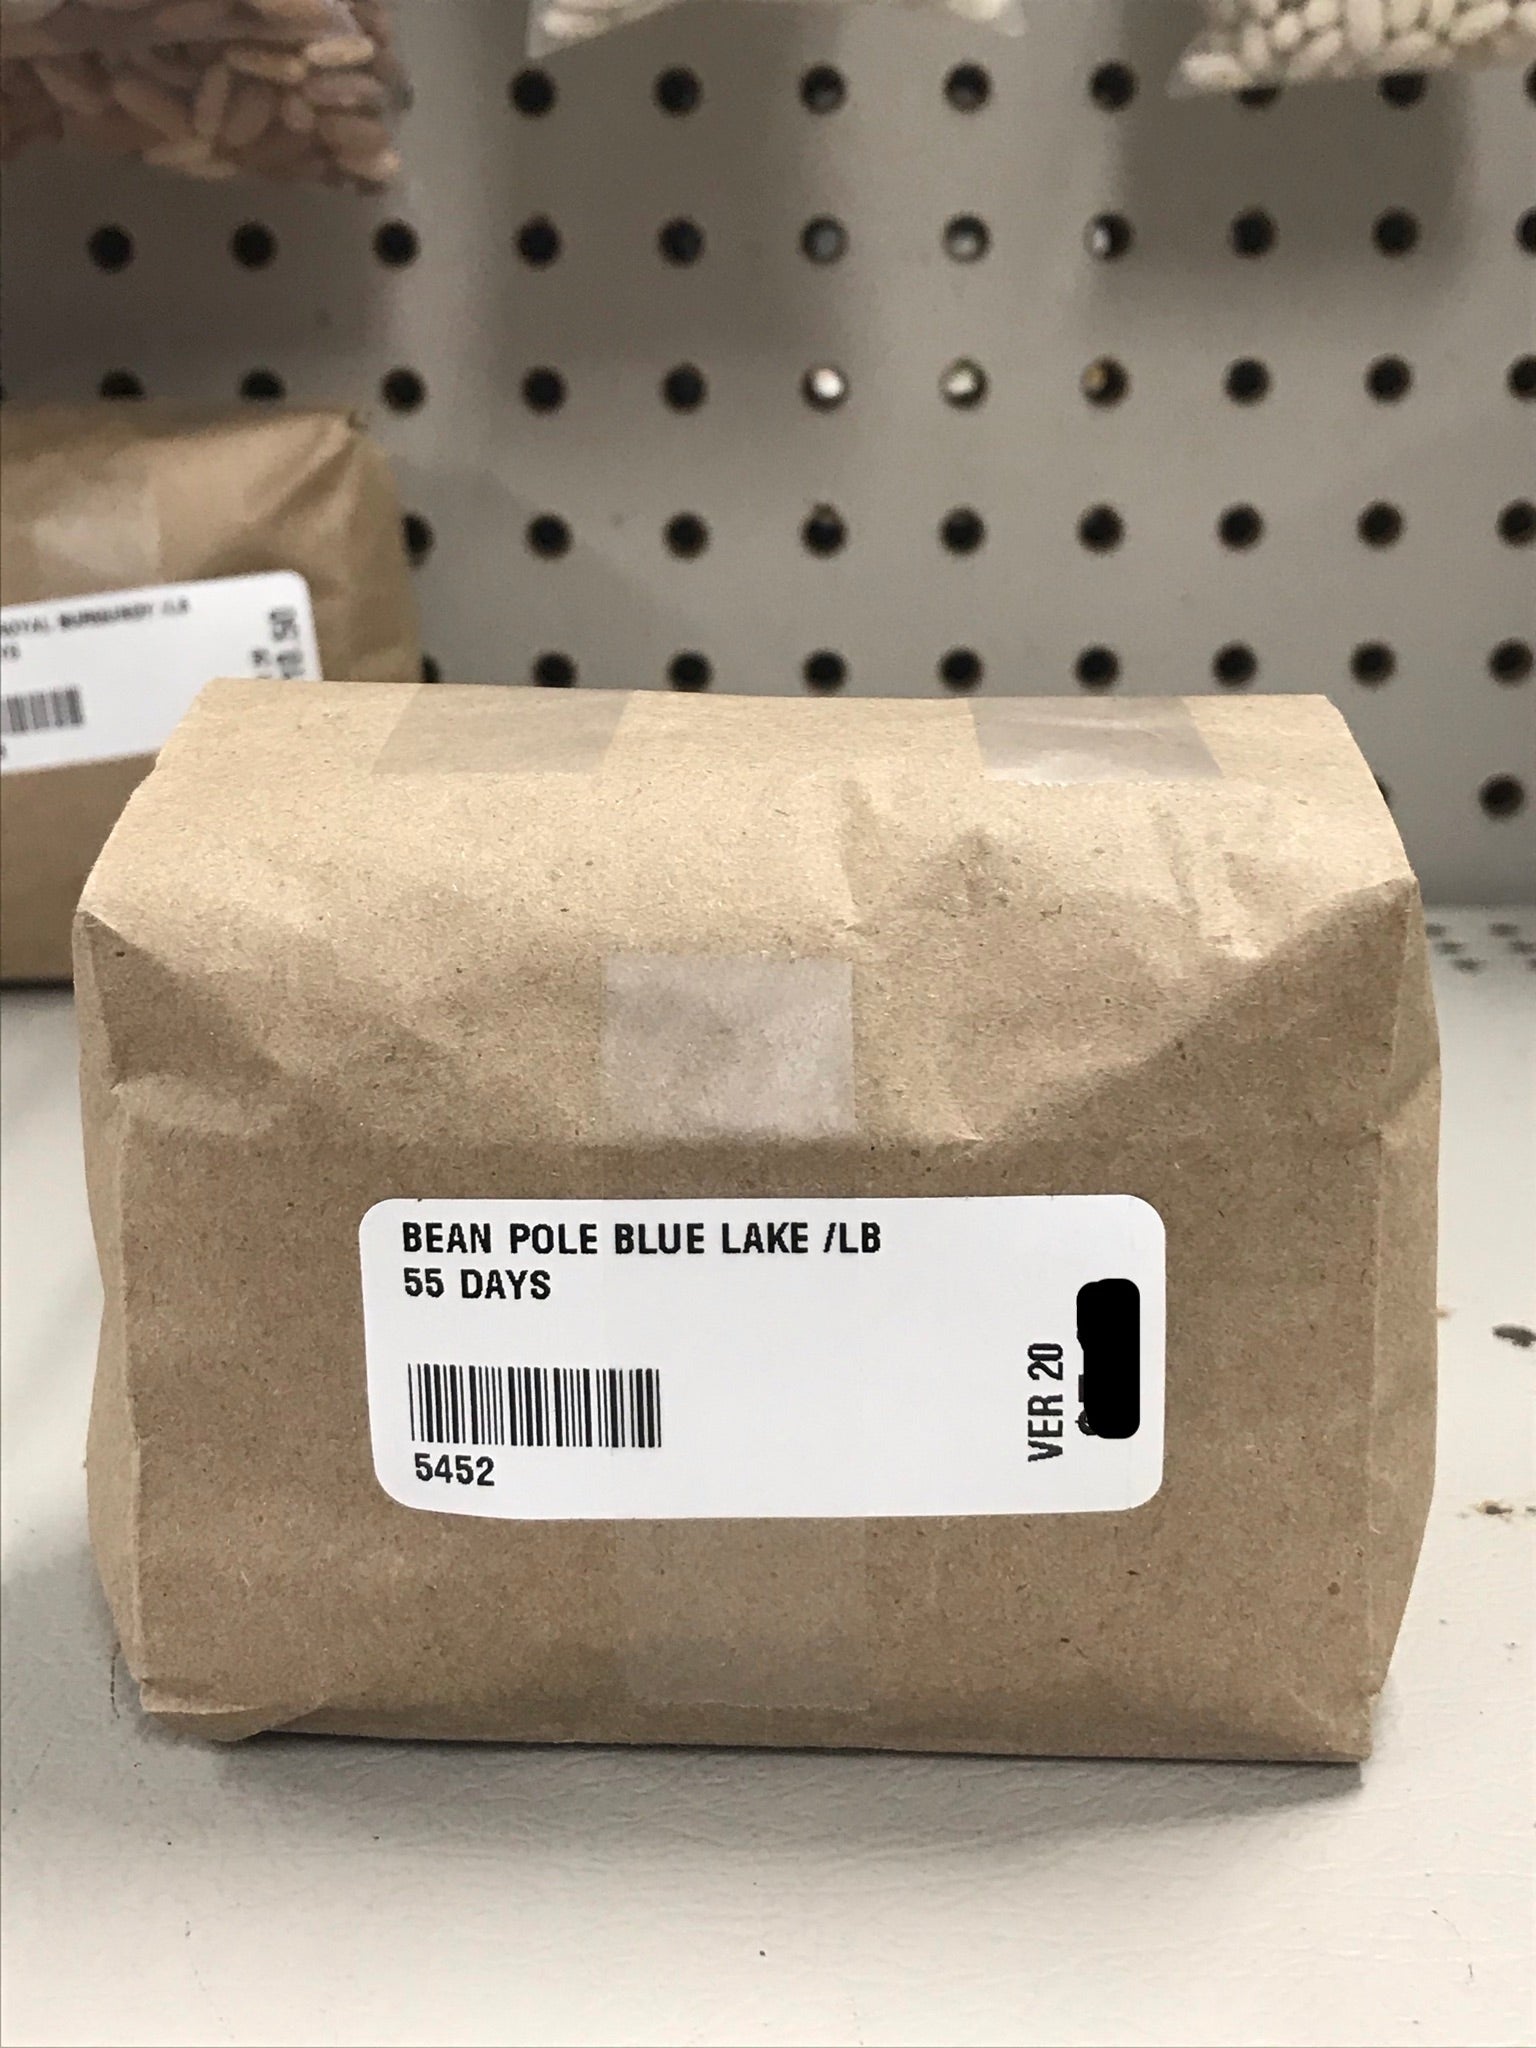 Blue Lake Pole Bean Seeds (55 Days) - 1lb - Bulk